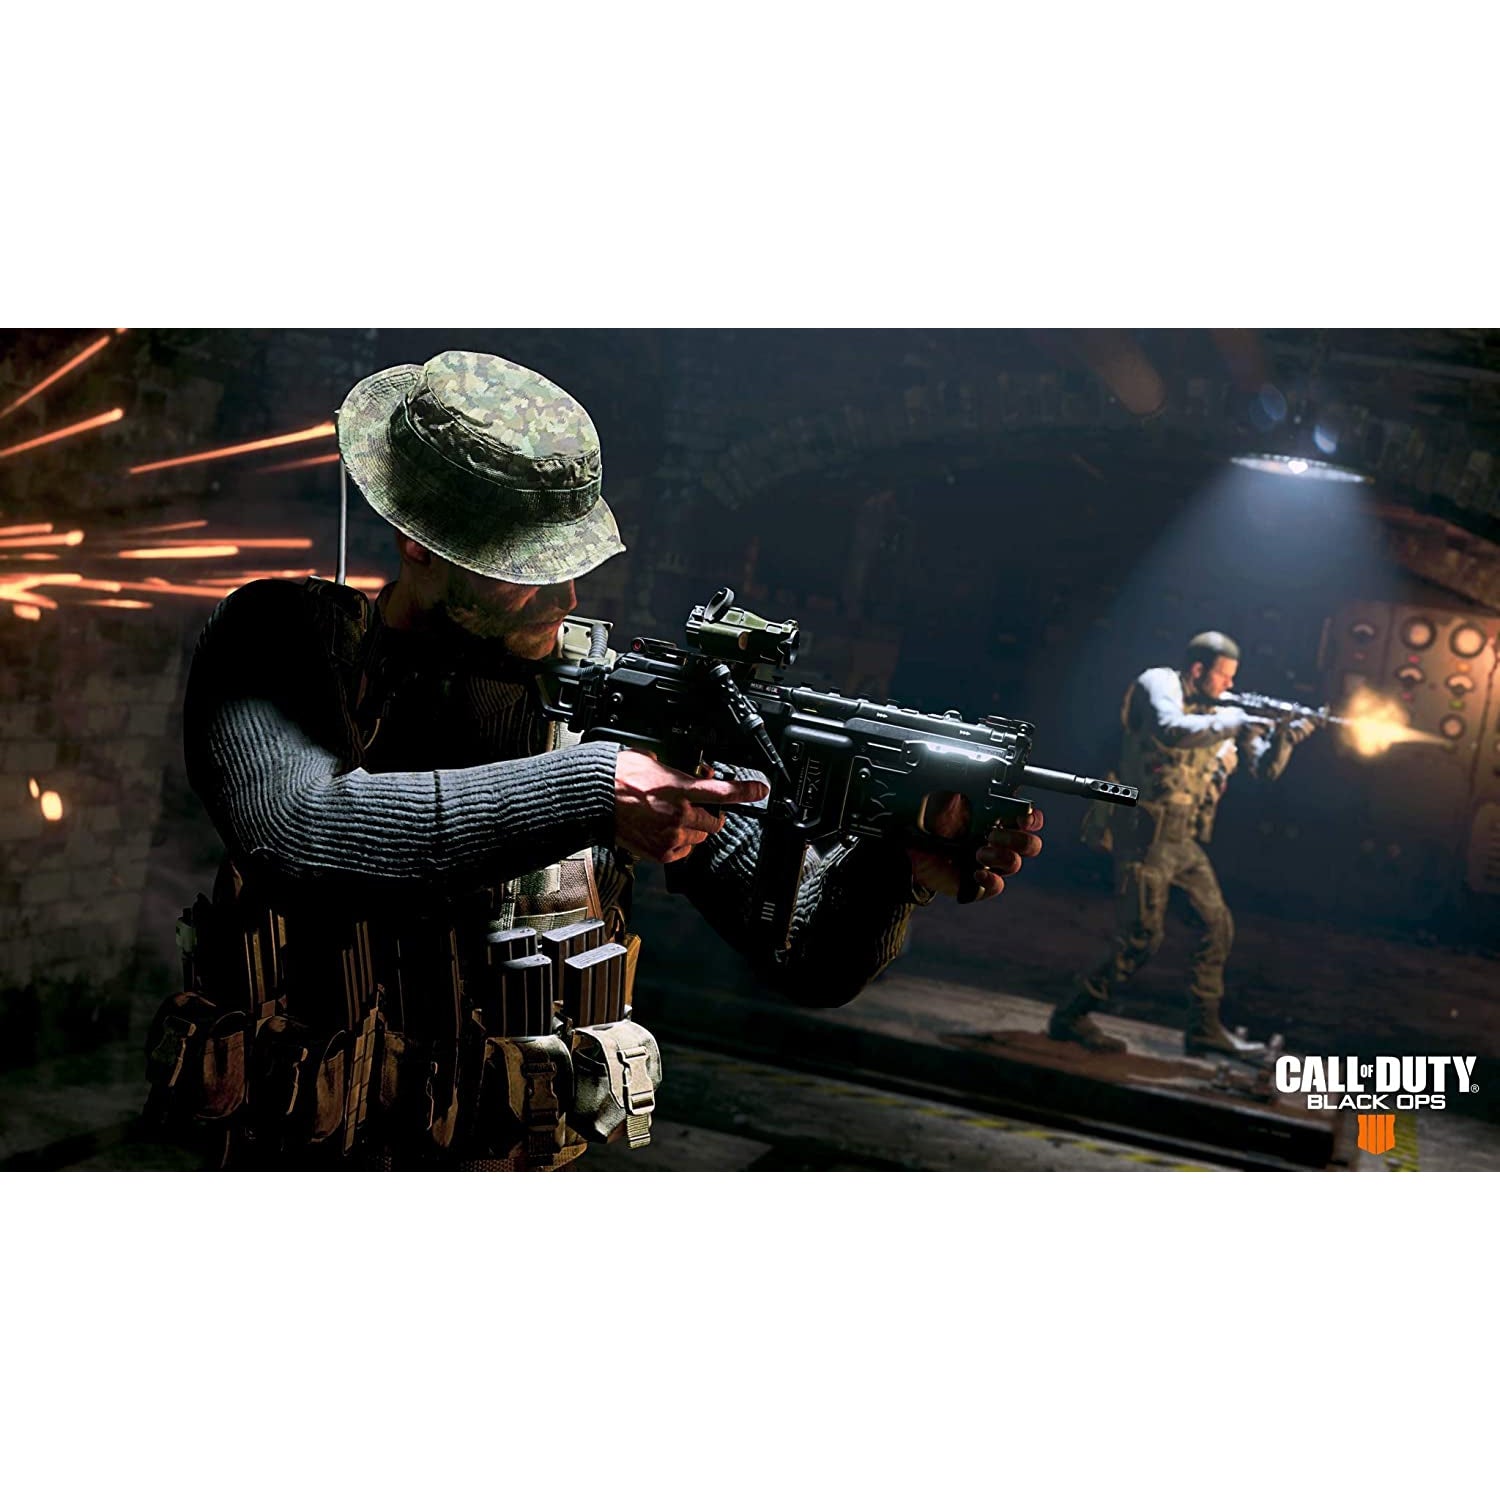 Call of Duty Modern Warfare (Xbox One) - Refurbished Pristine